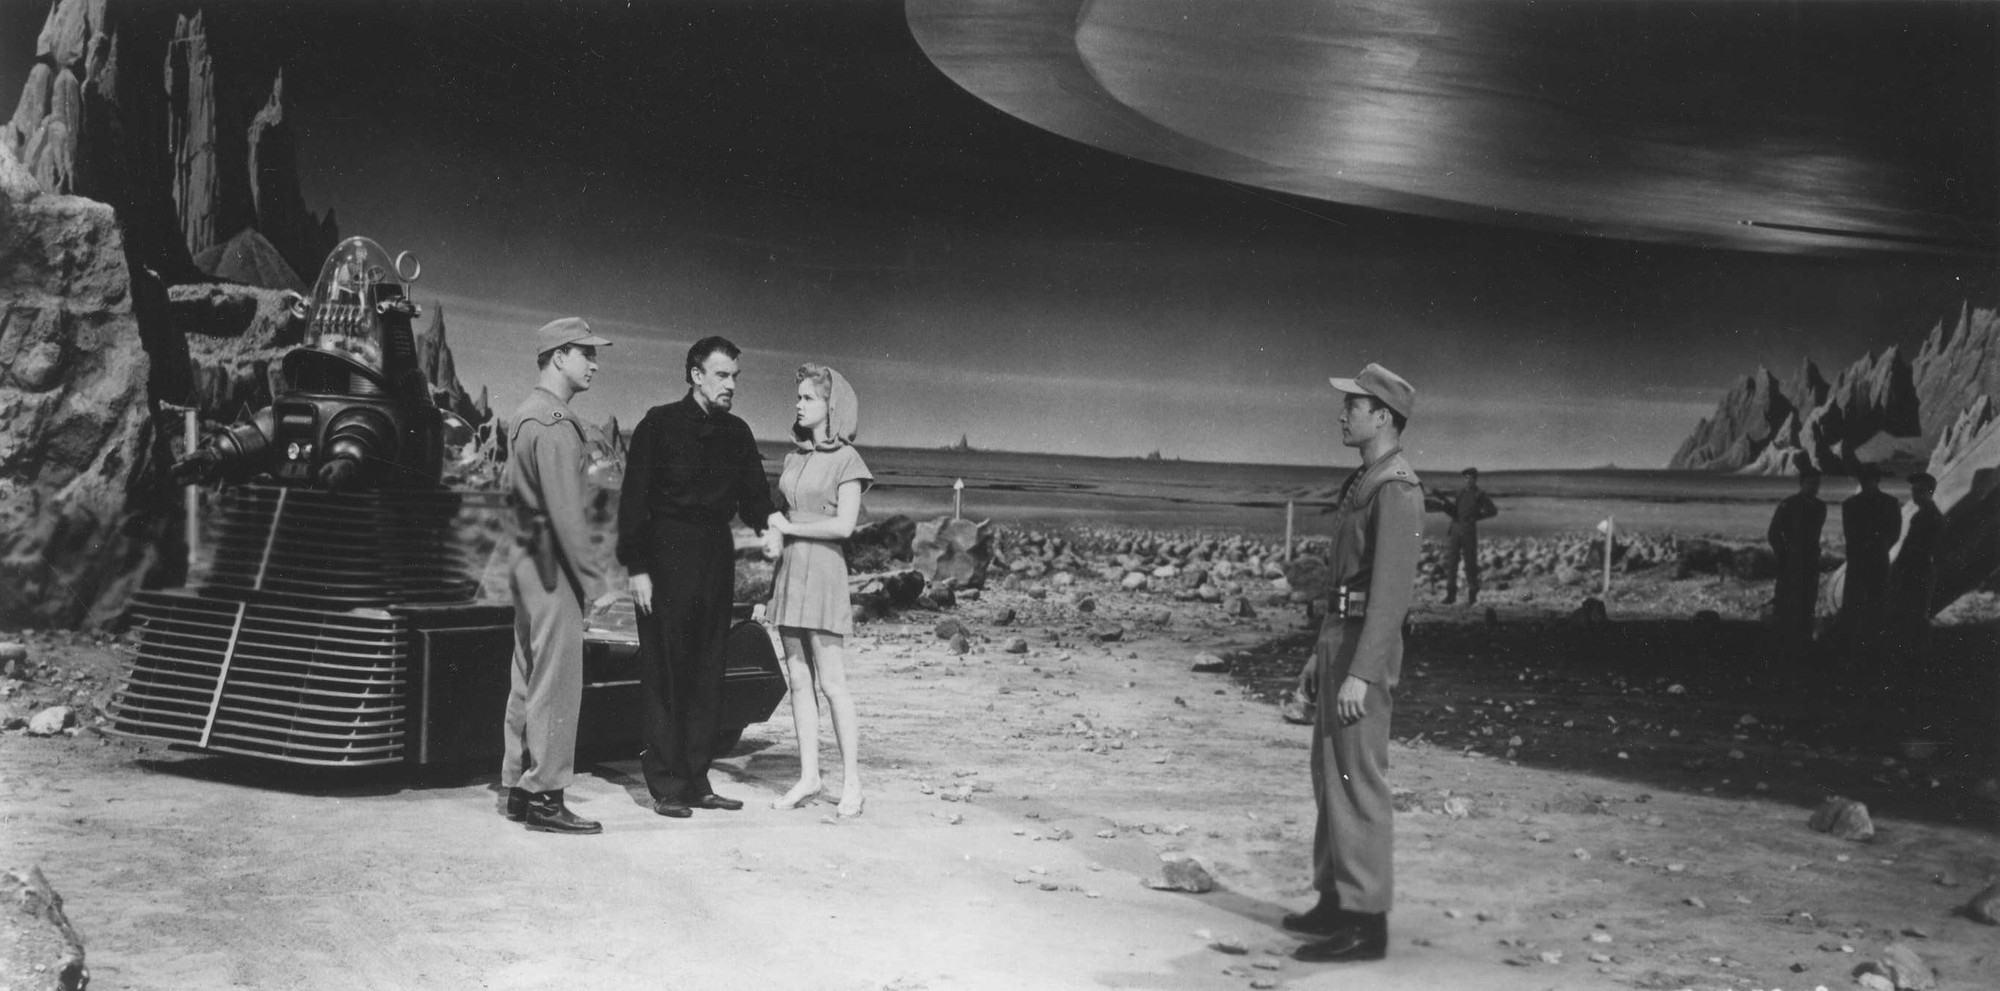 October 21, 2016, 8:00 p.m. - Forbidden Planet (1956)